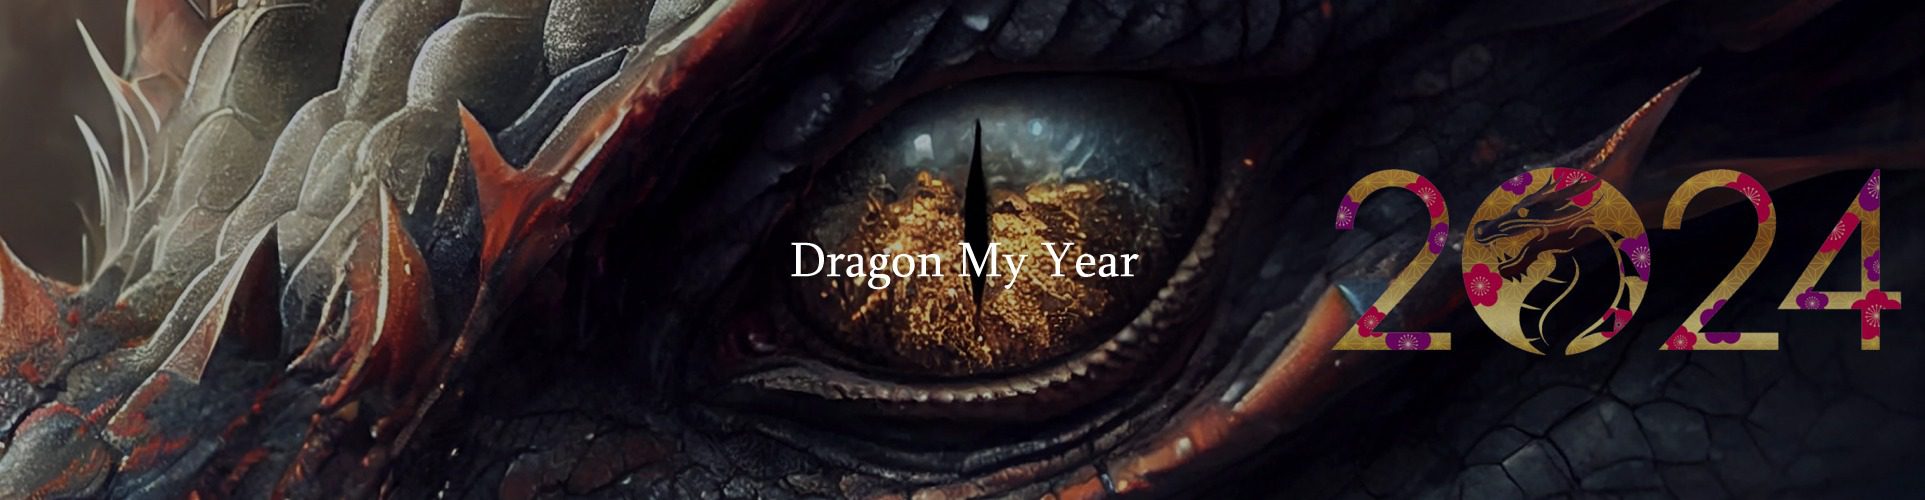 Dragon My Year